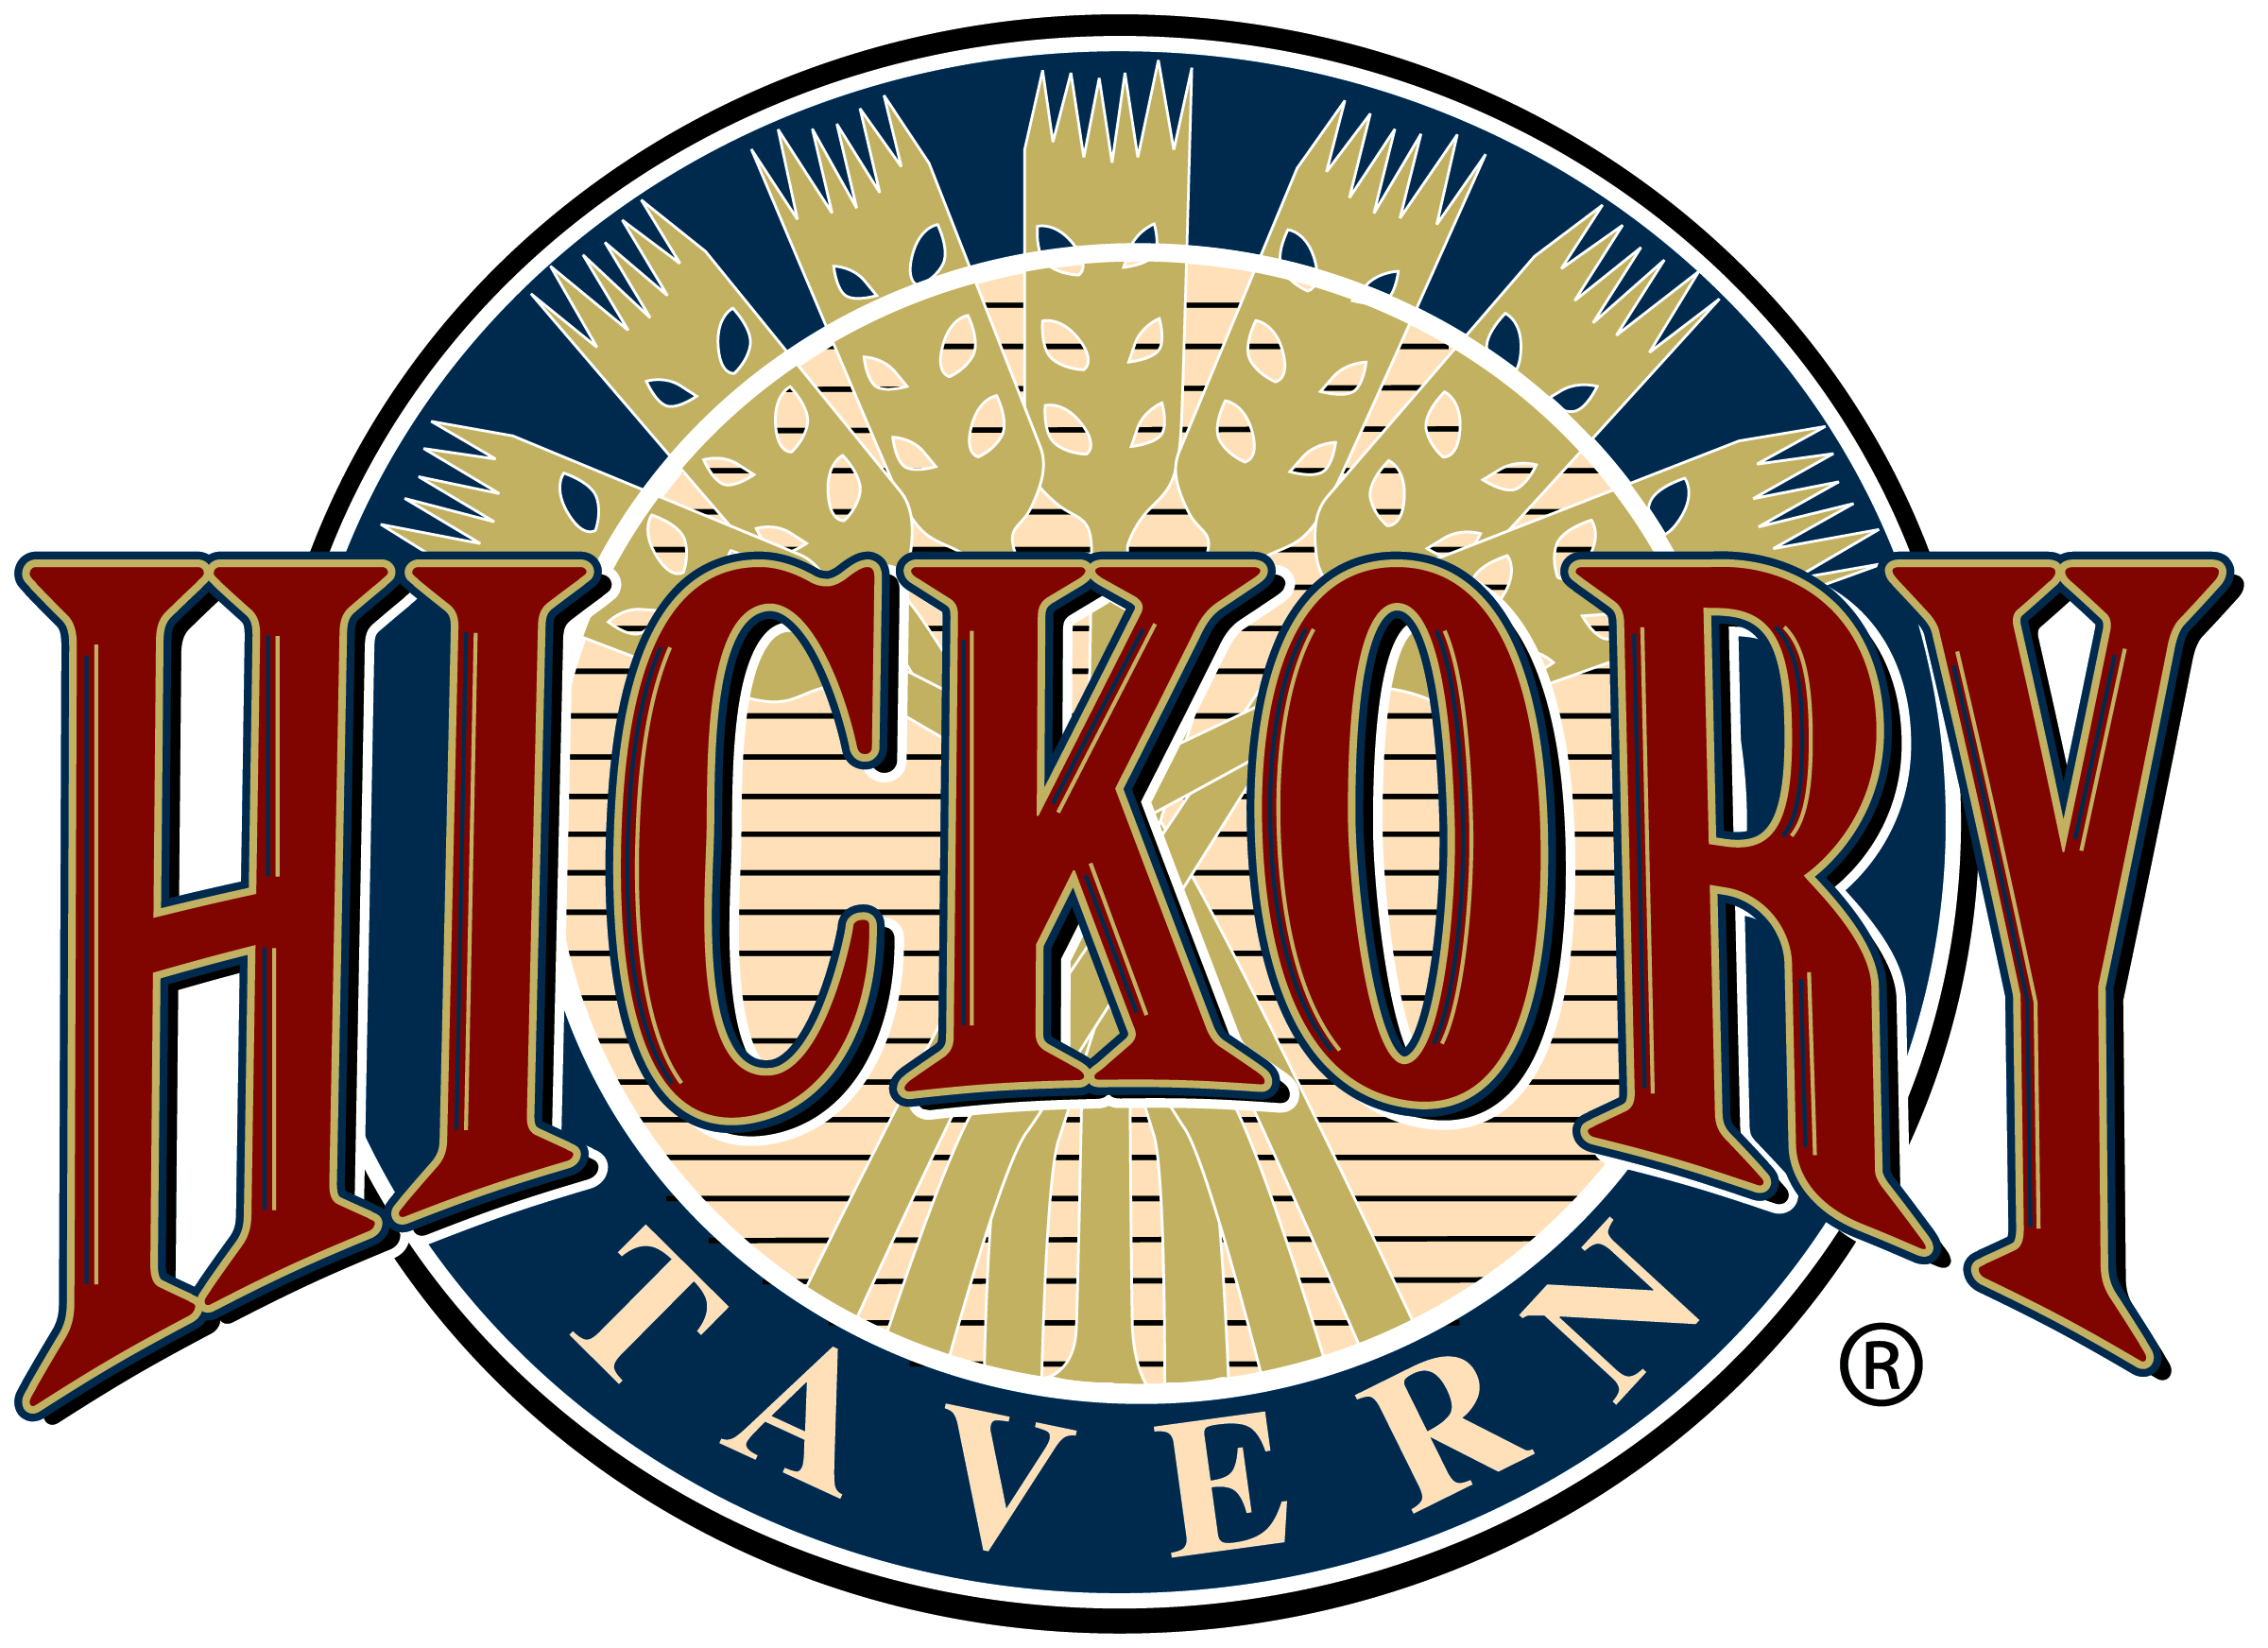 Sponsor Hickory Tavern